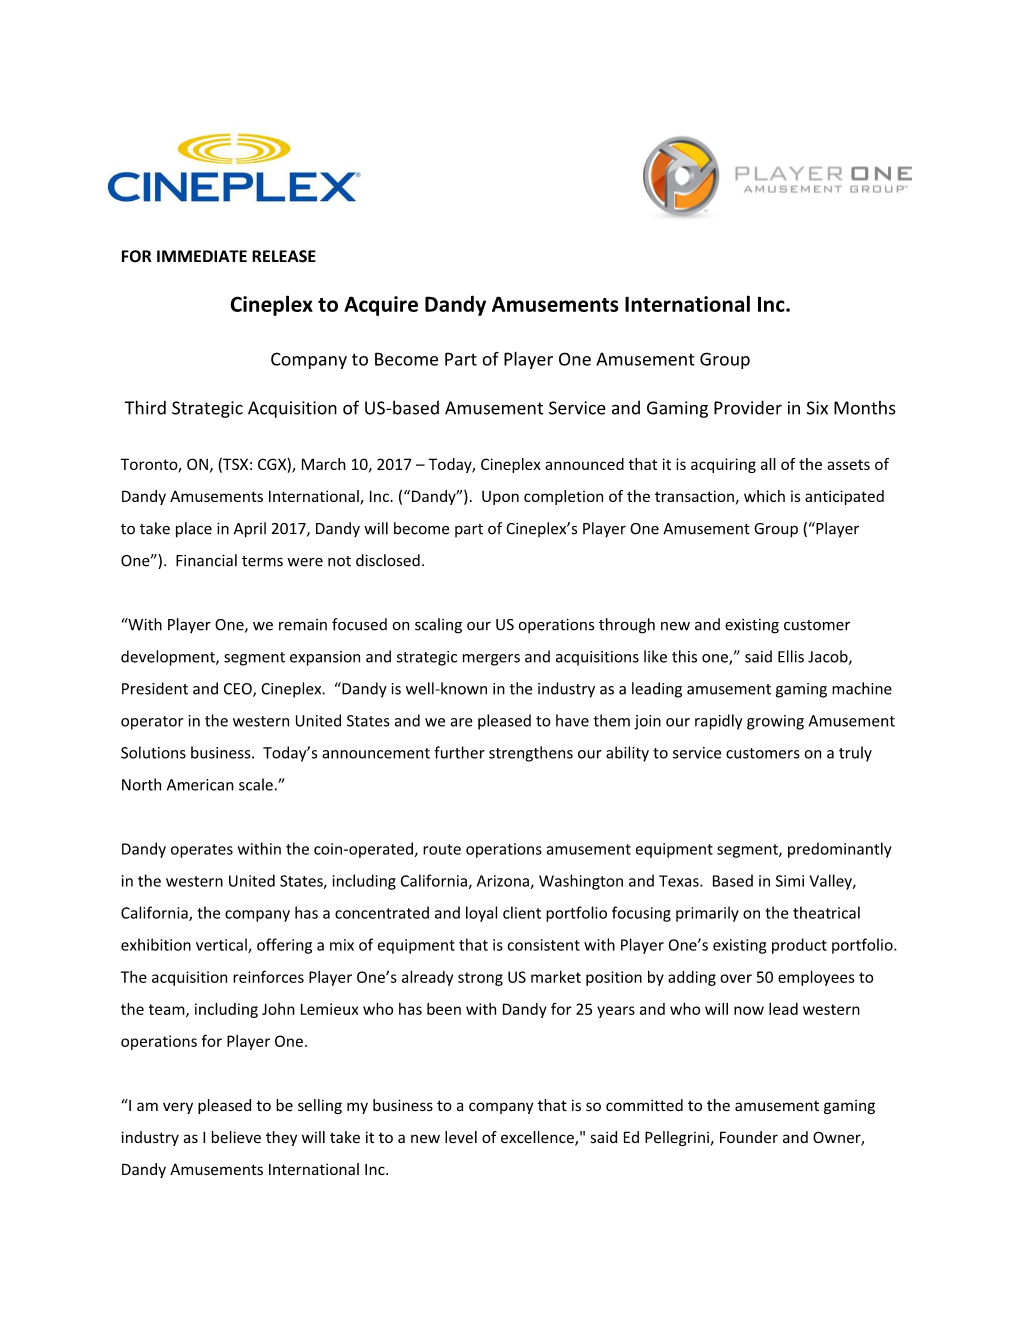 Cineplex to Acquire Dandy Amusements International Inc